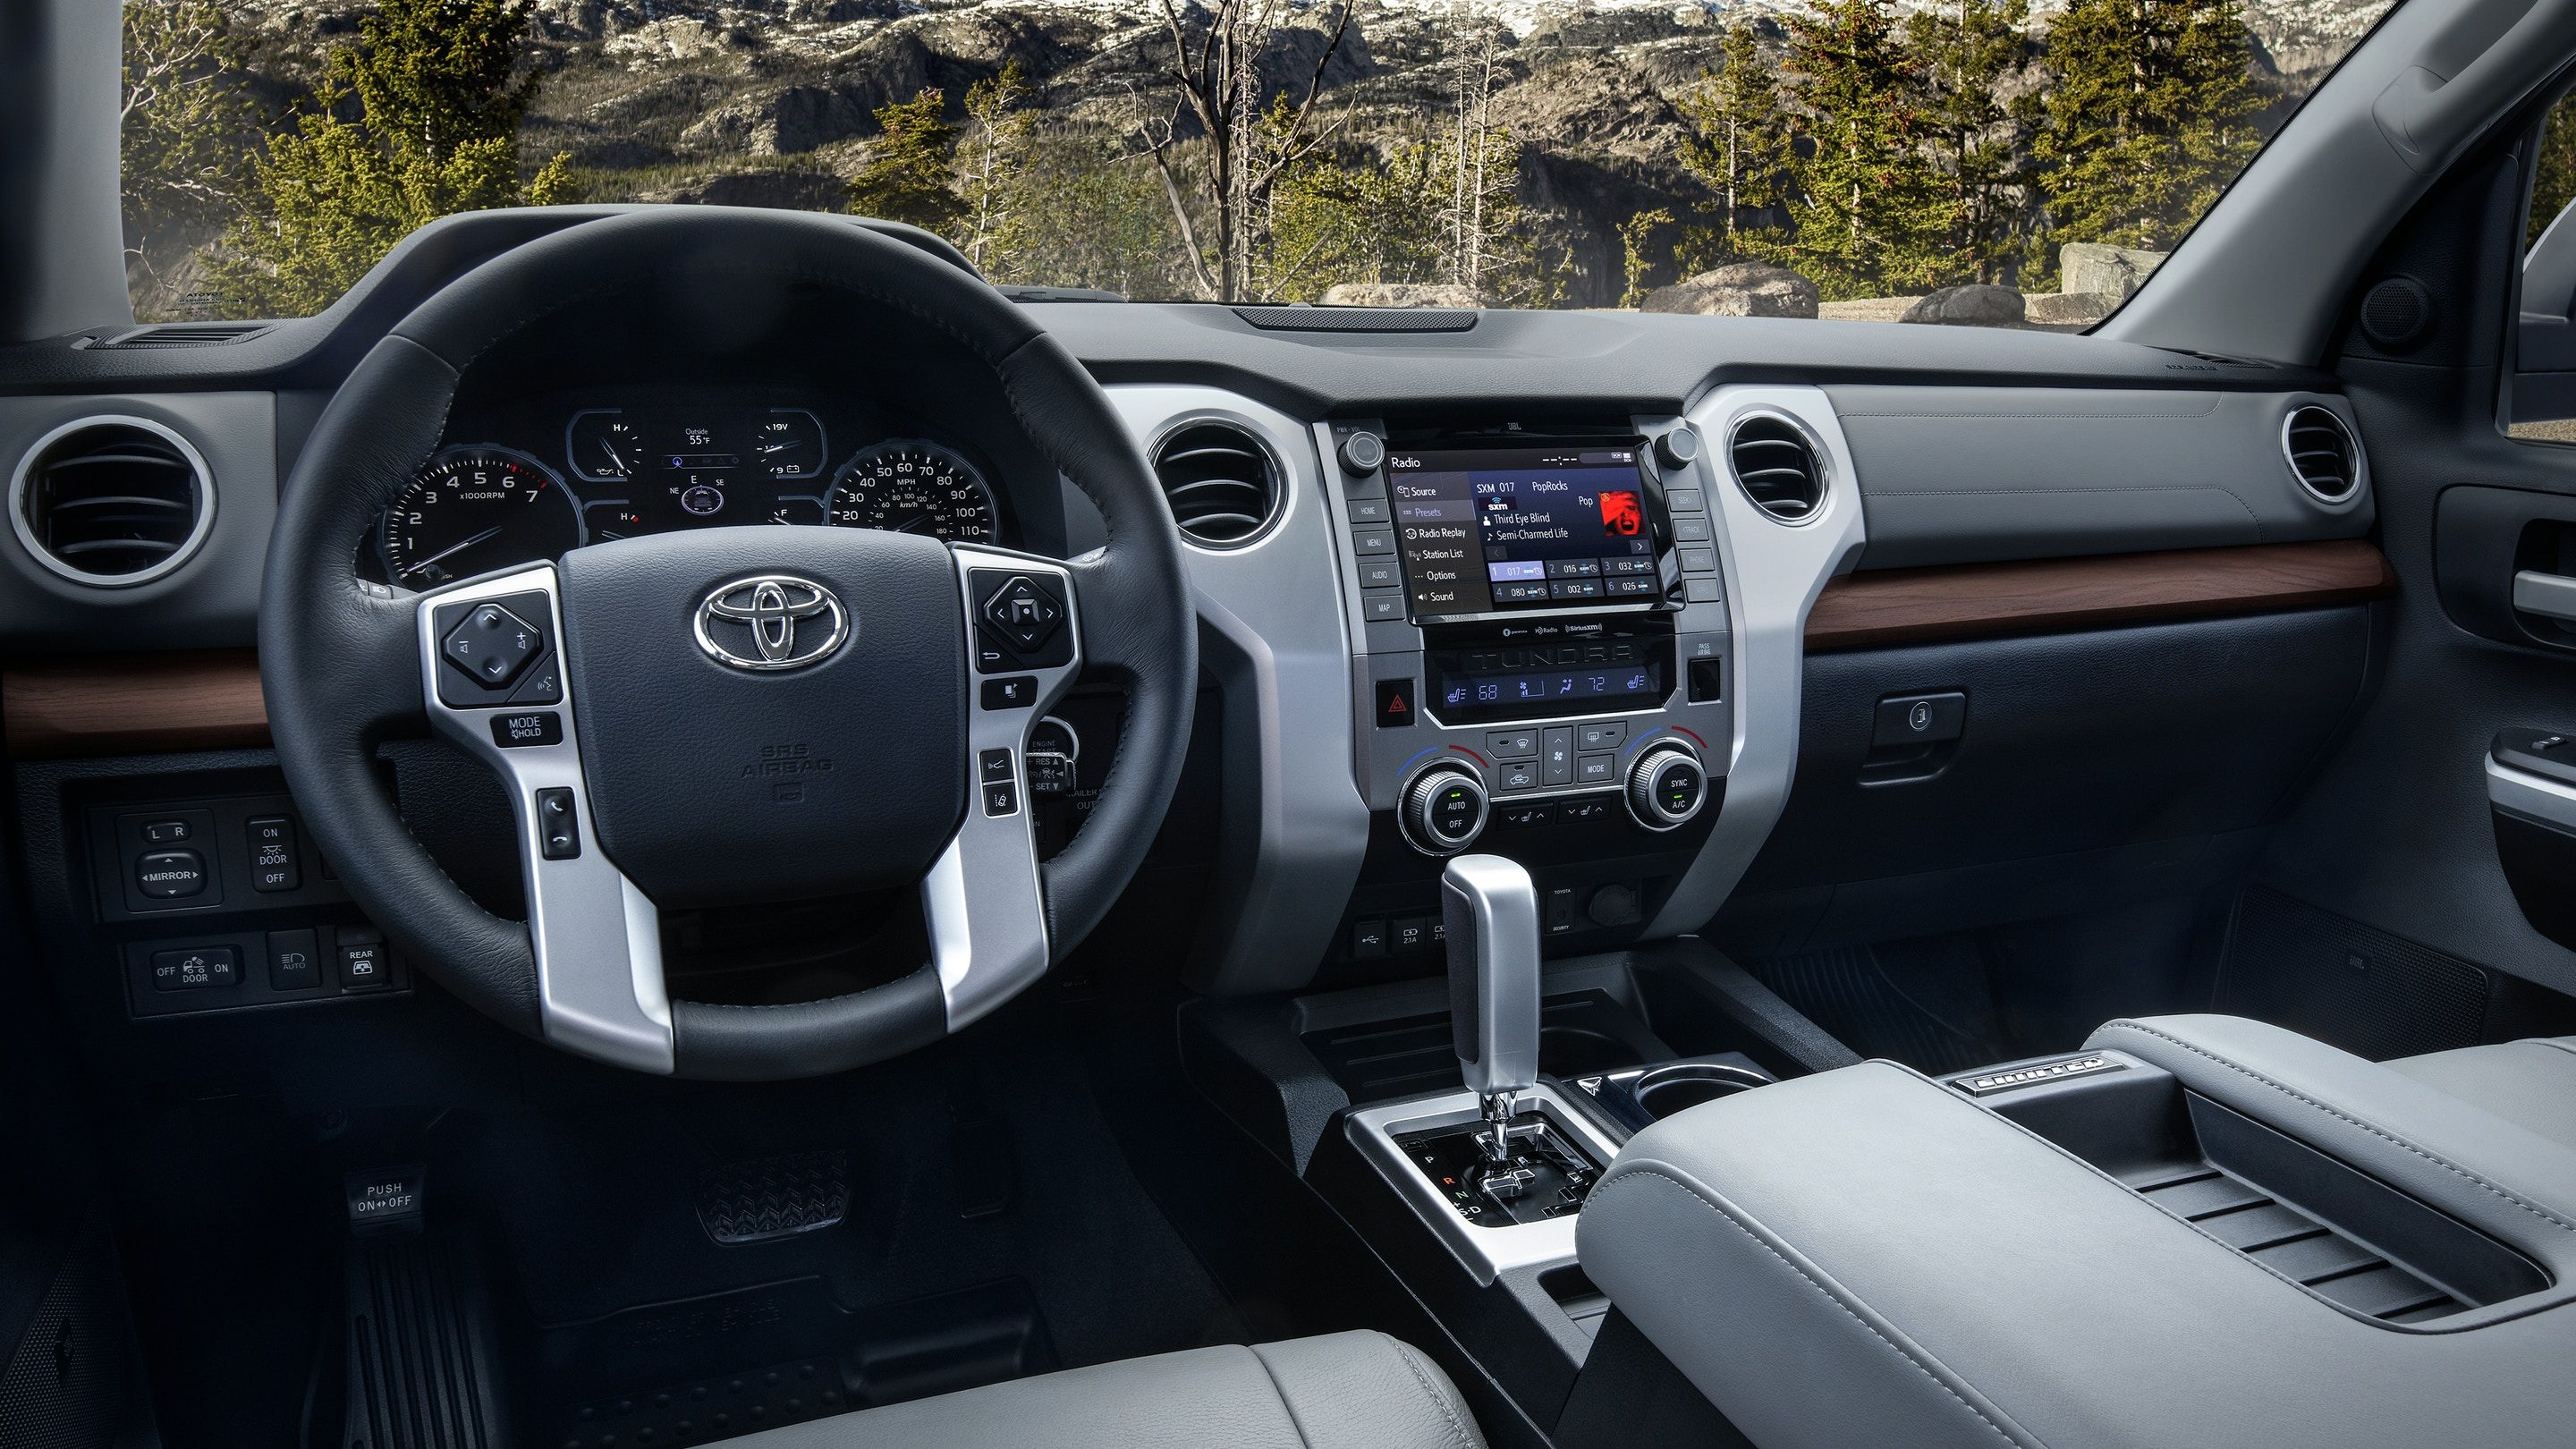 The interior of the 2021 Toyota Tundra Interior.